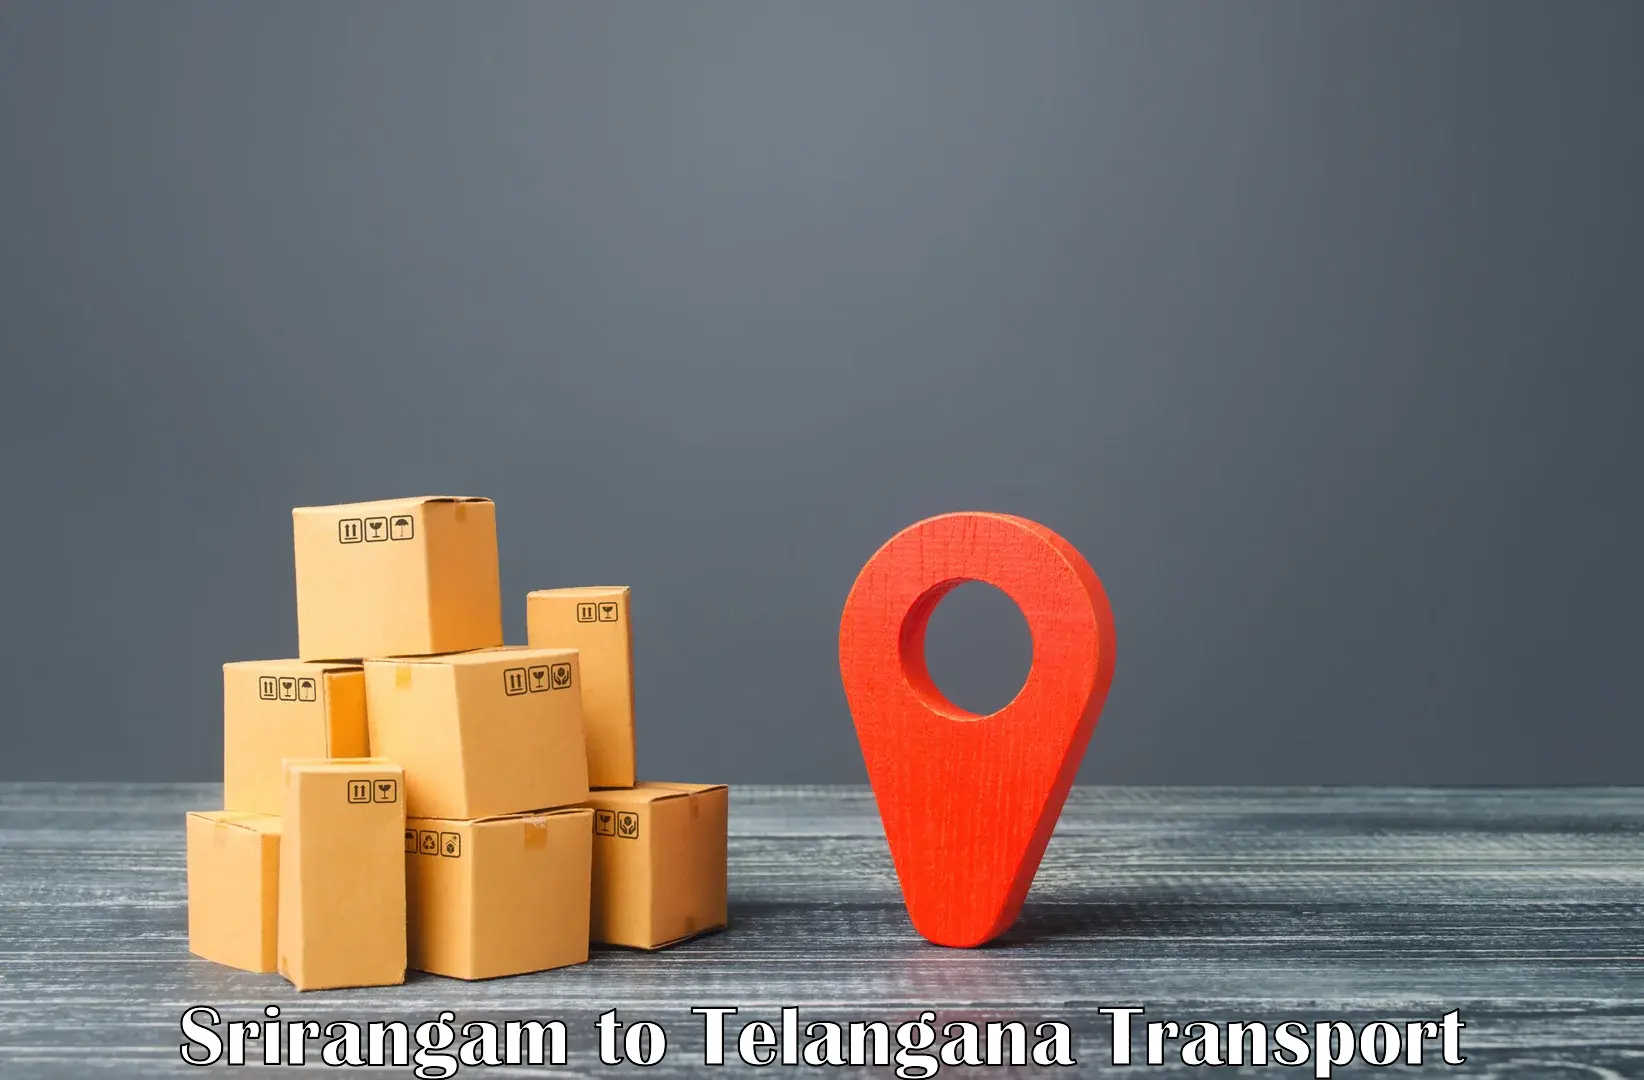 Transport in sharing Srirangam to Manopad